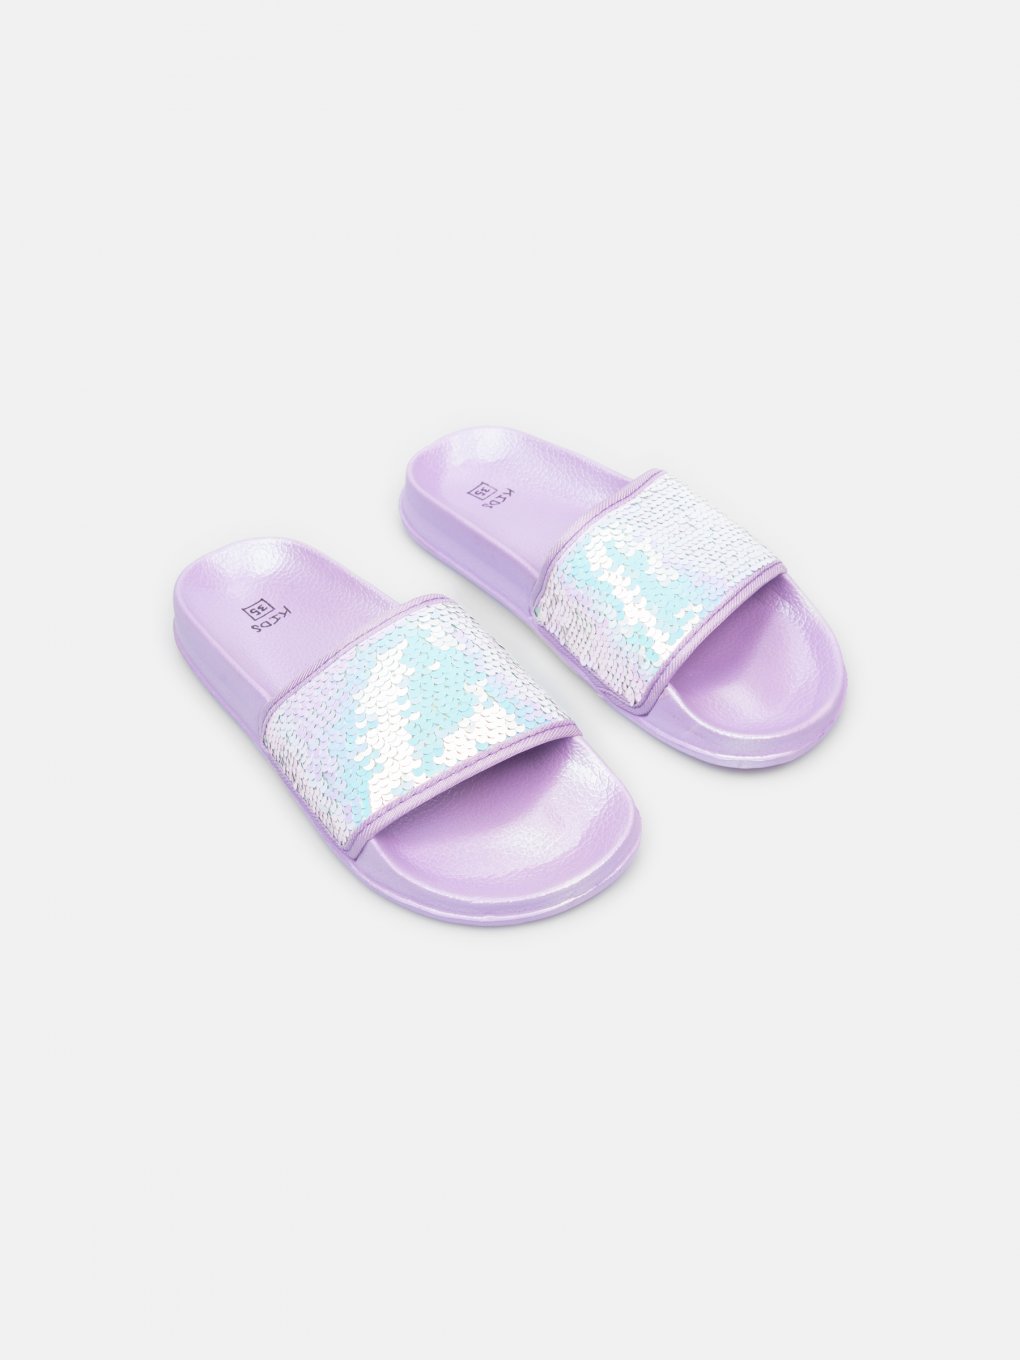 Sequin slippers